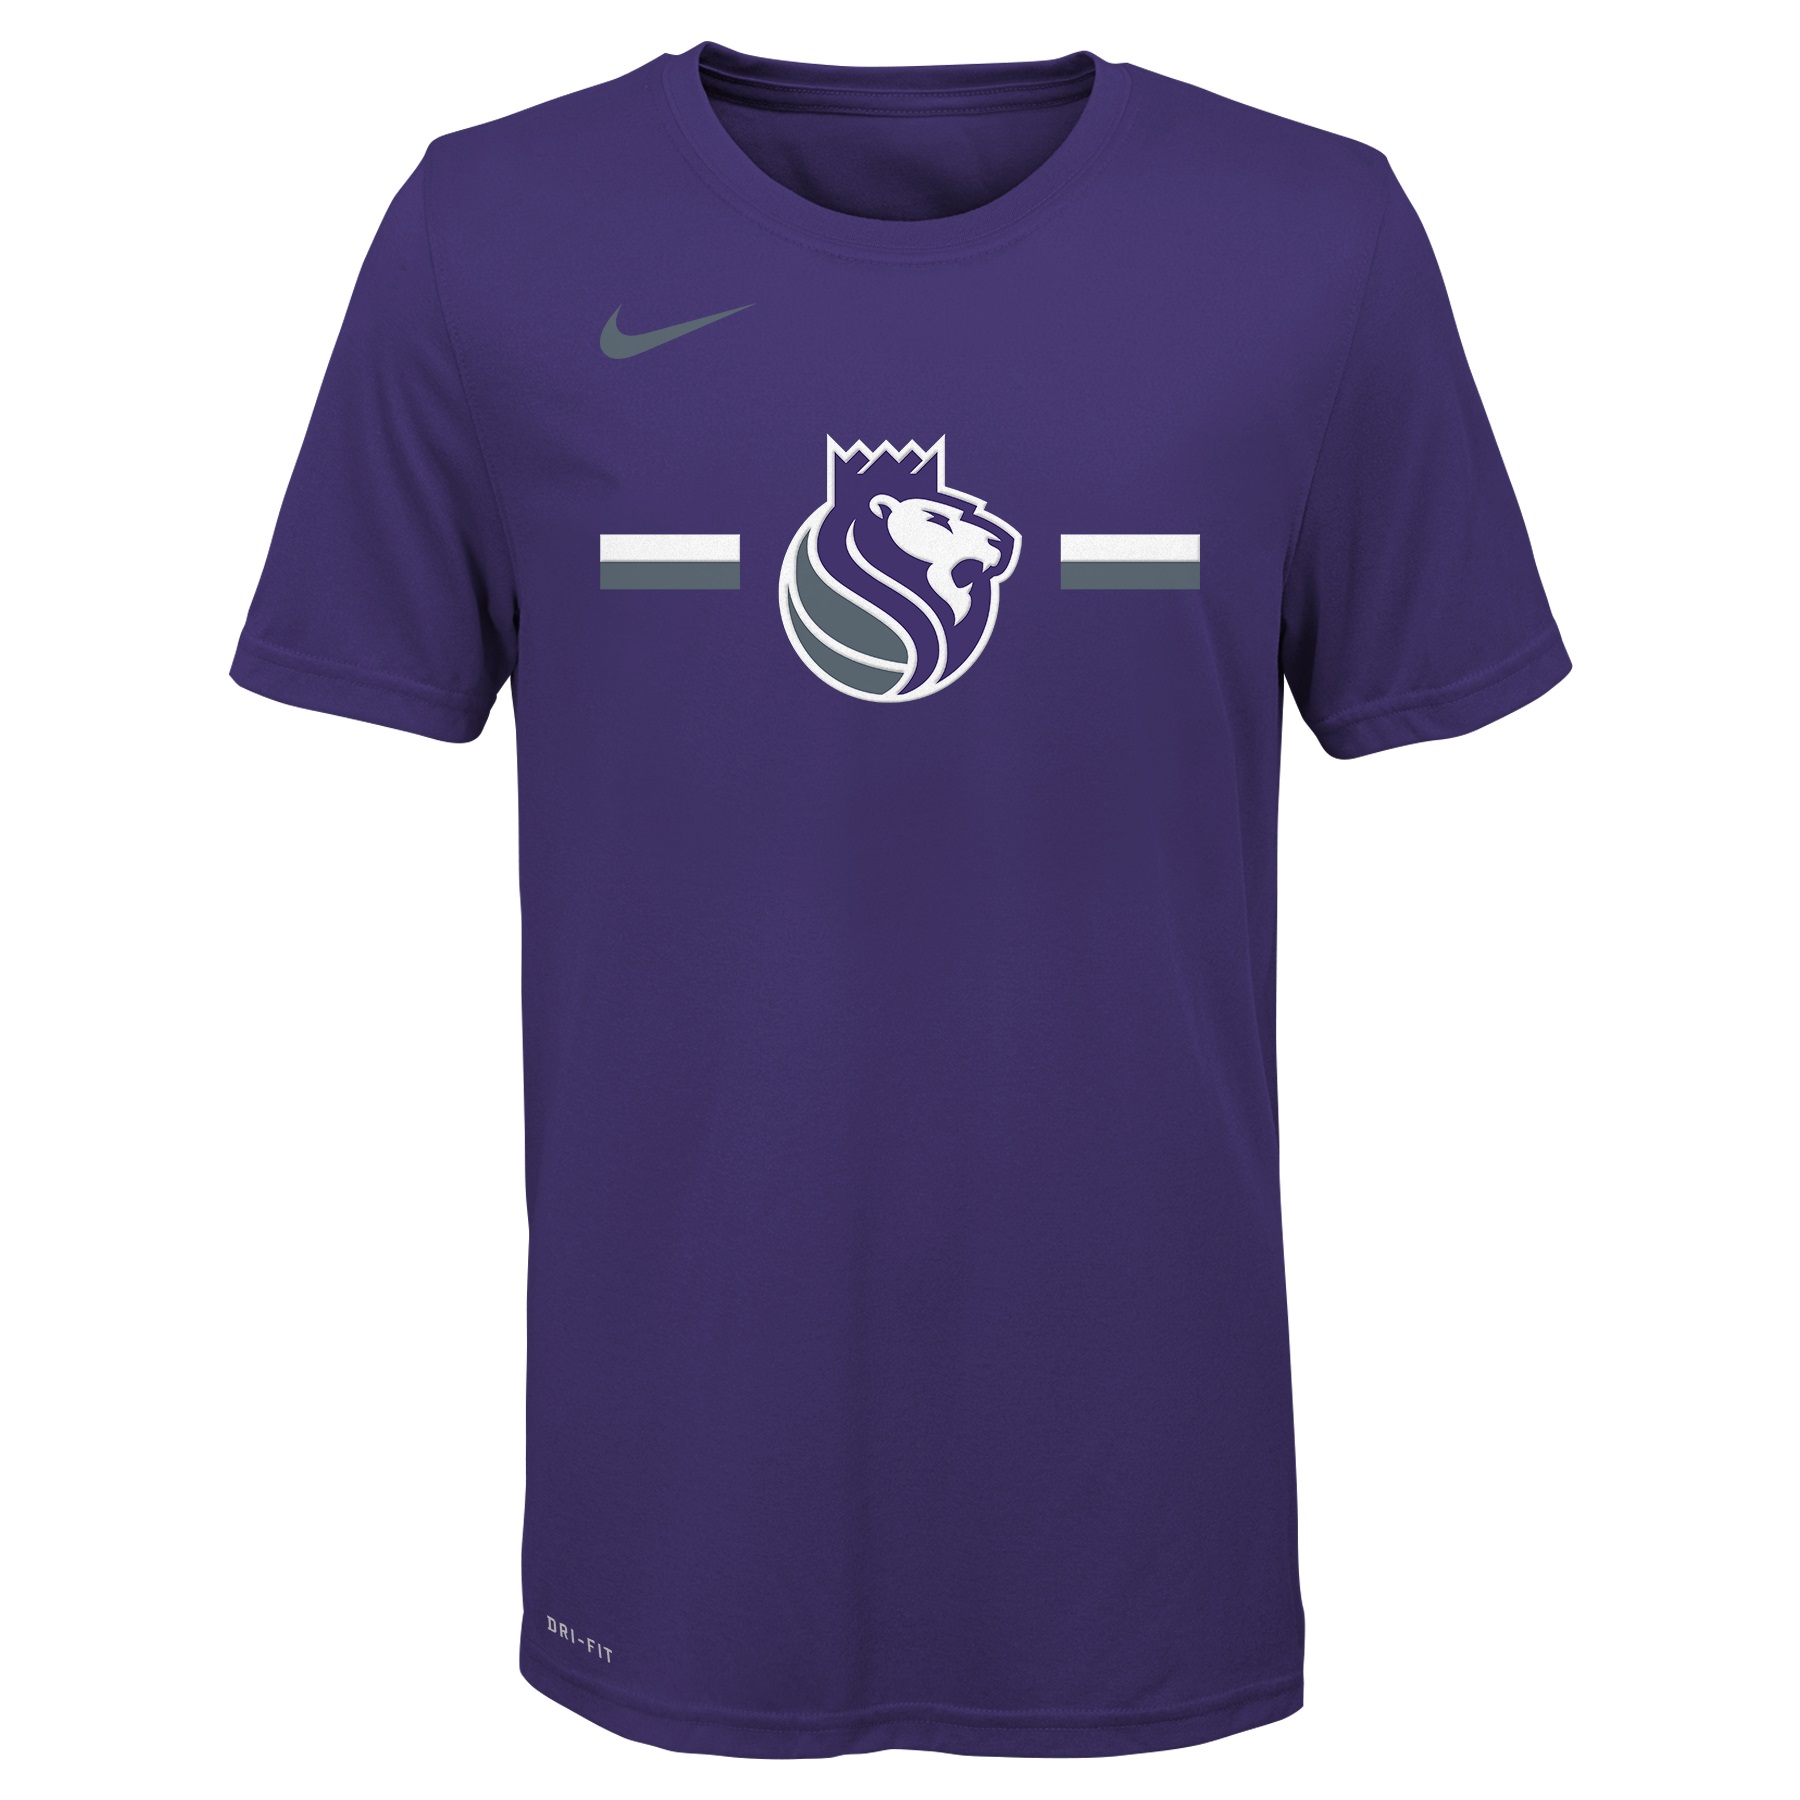 Nike NBA Youth Sacramento Kings Dry Fit Essential Logo Tee Shirt | eBay